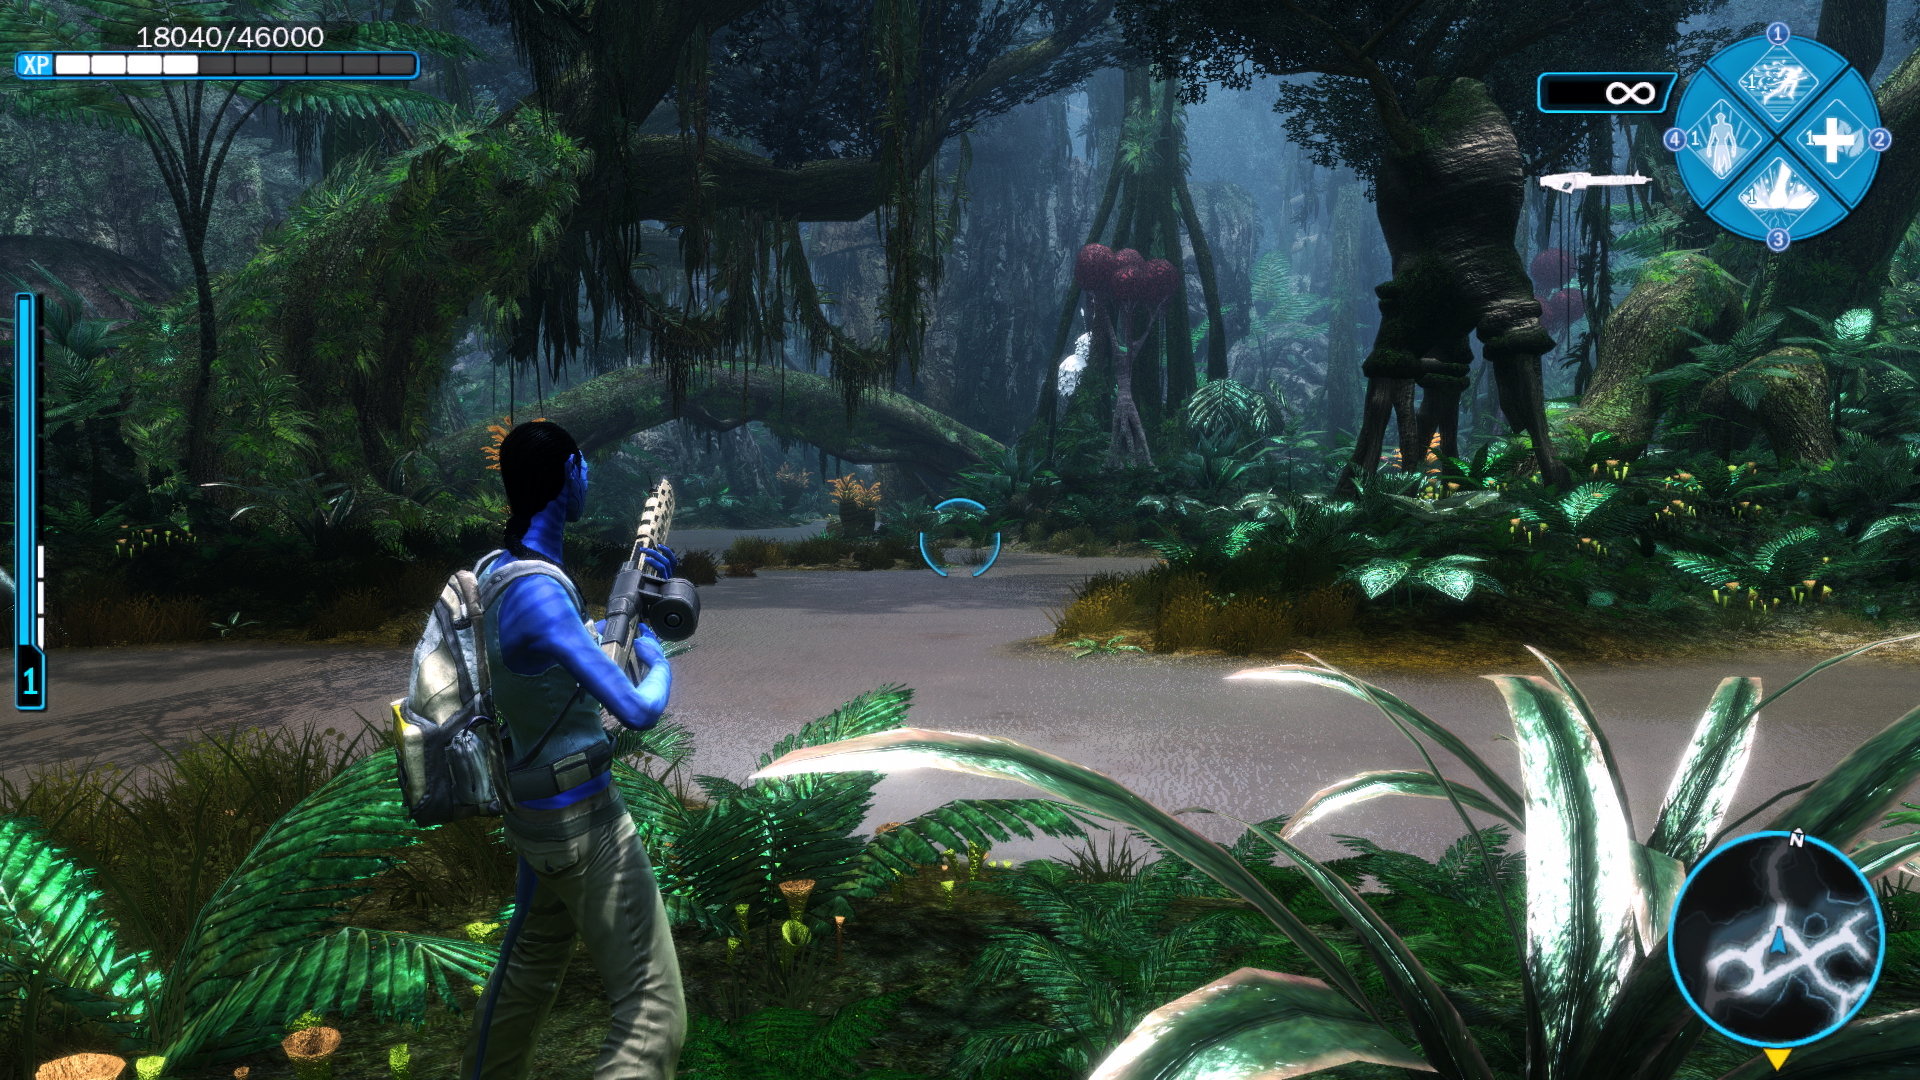  Avatar - PC : Video Games